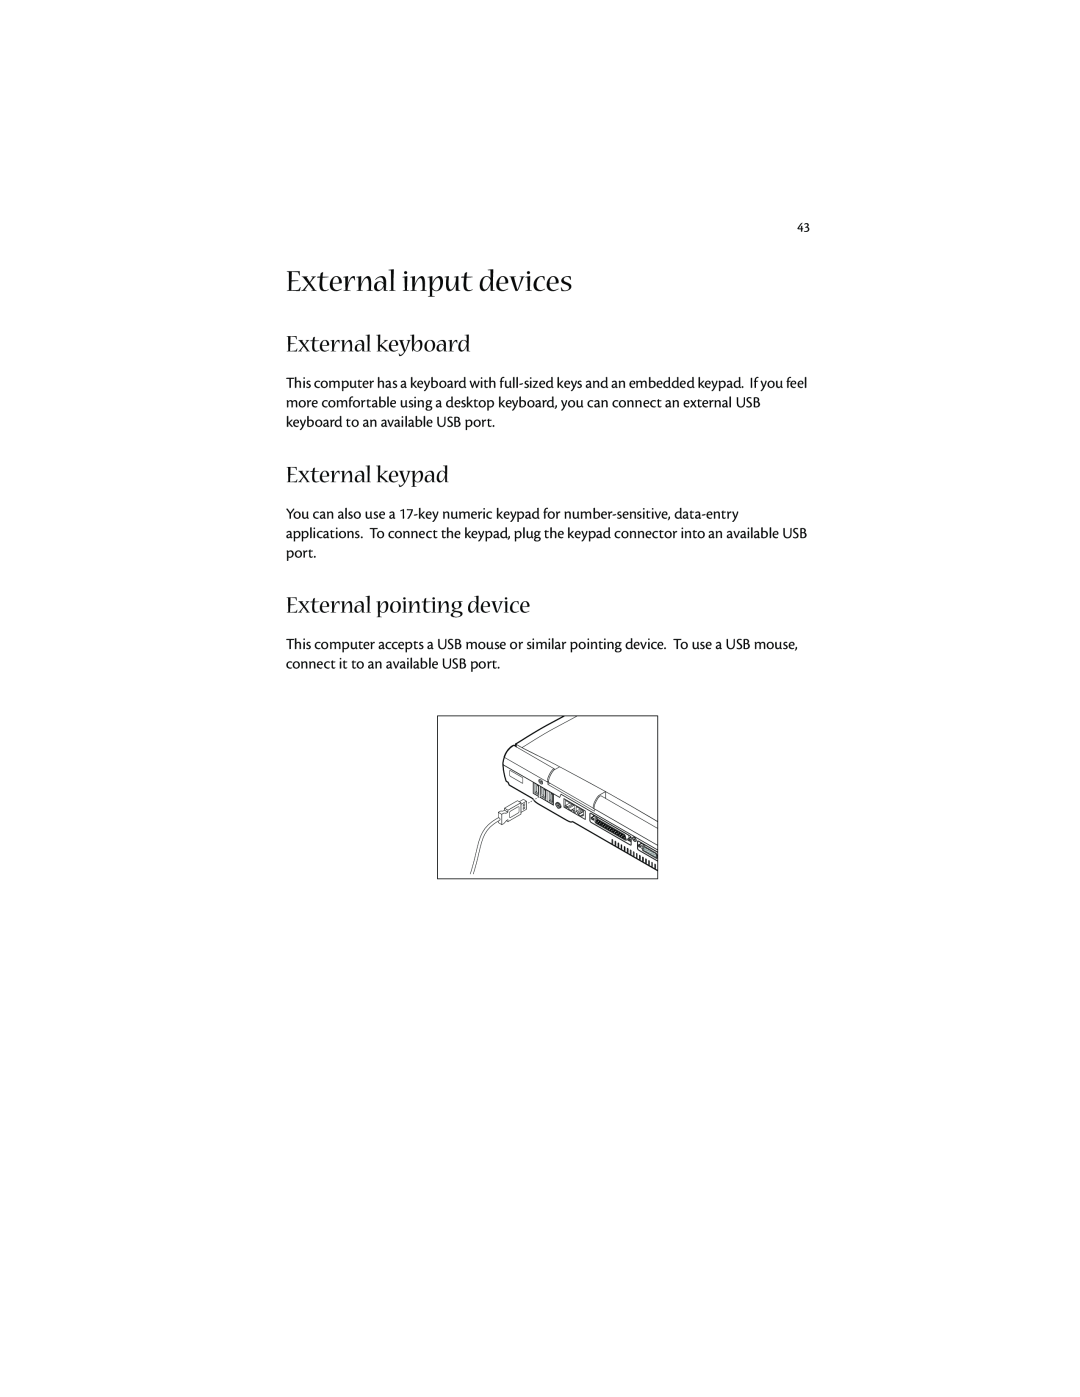 Acer 1400 manual External input devices, External keyboard, External keypad, External pointing device 